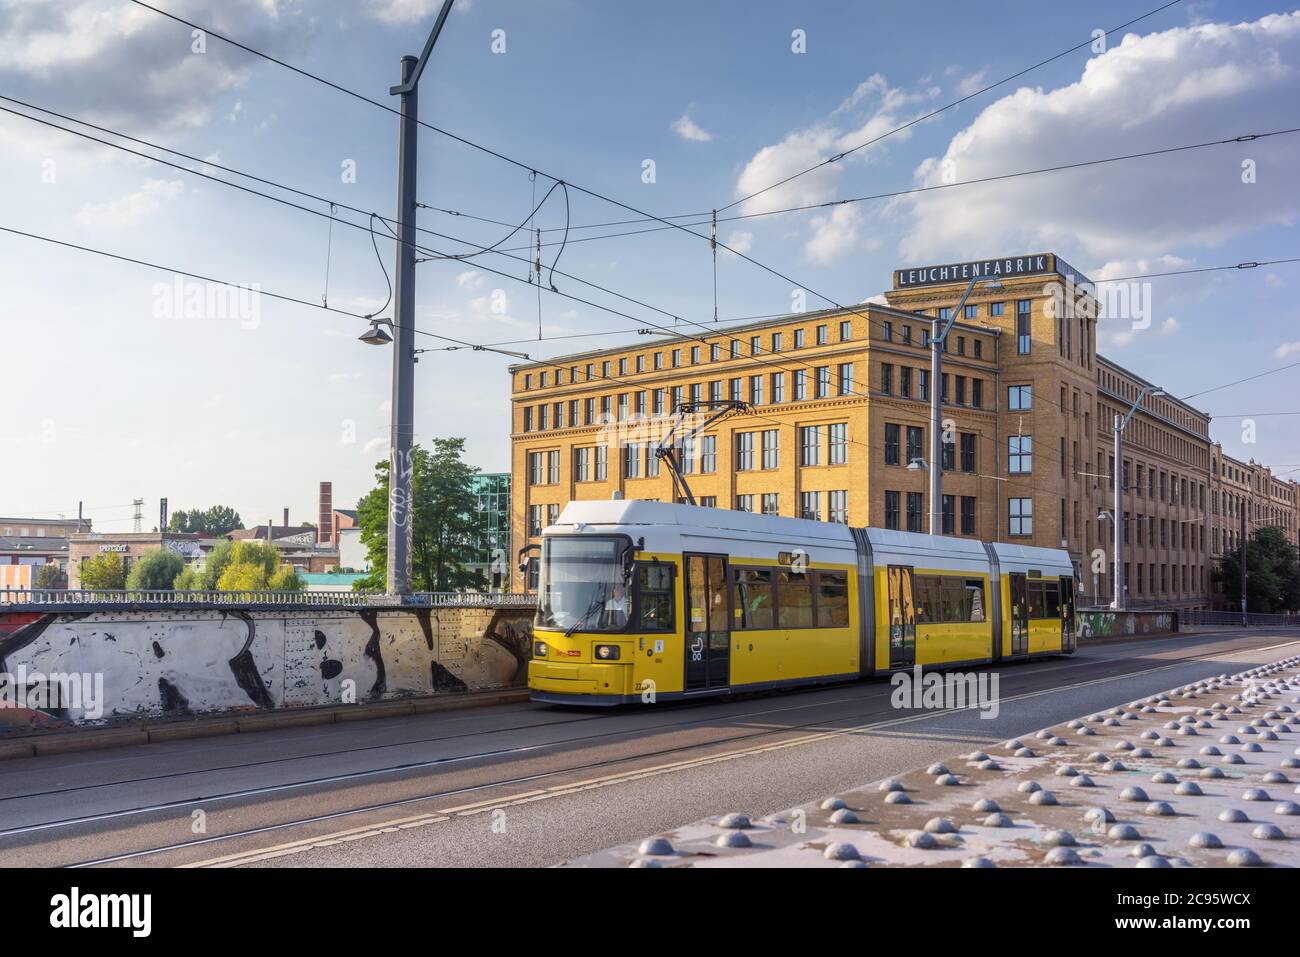 Un tram passava per Leuchtenfabrik, un vecchio edificio industriale lungo Edissonstrasse a Berlino Oberschöneweide, Berlino, Germania, Europa Foto Stock